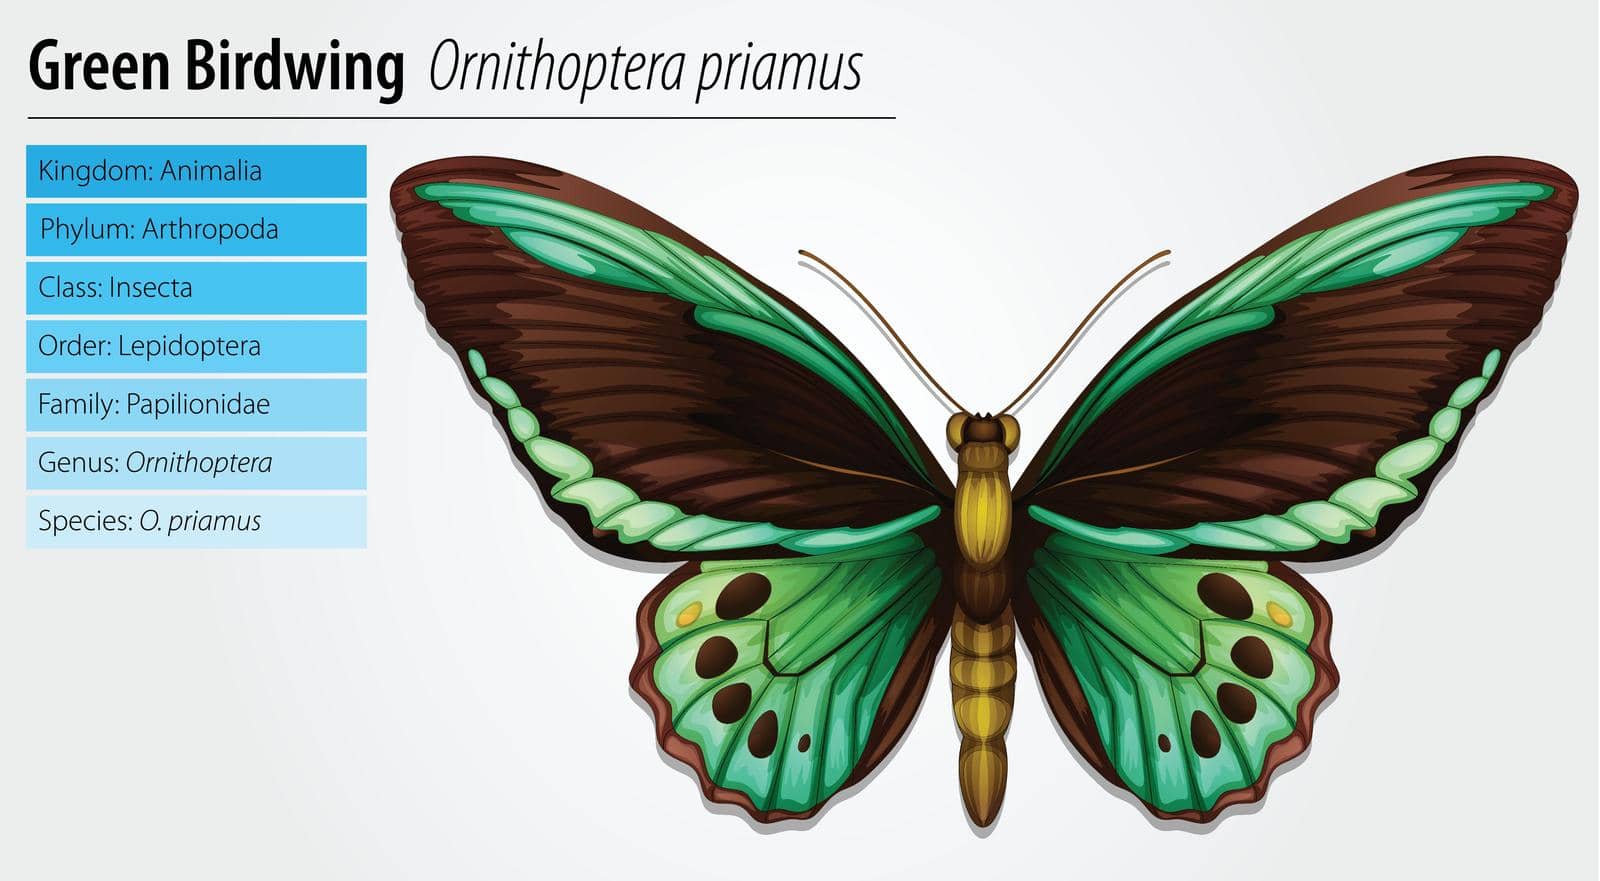 Green Birdwing butterfly by iimages